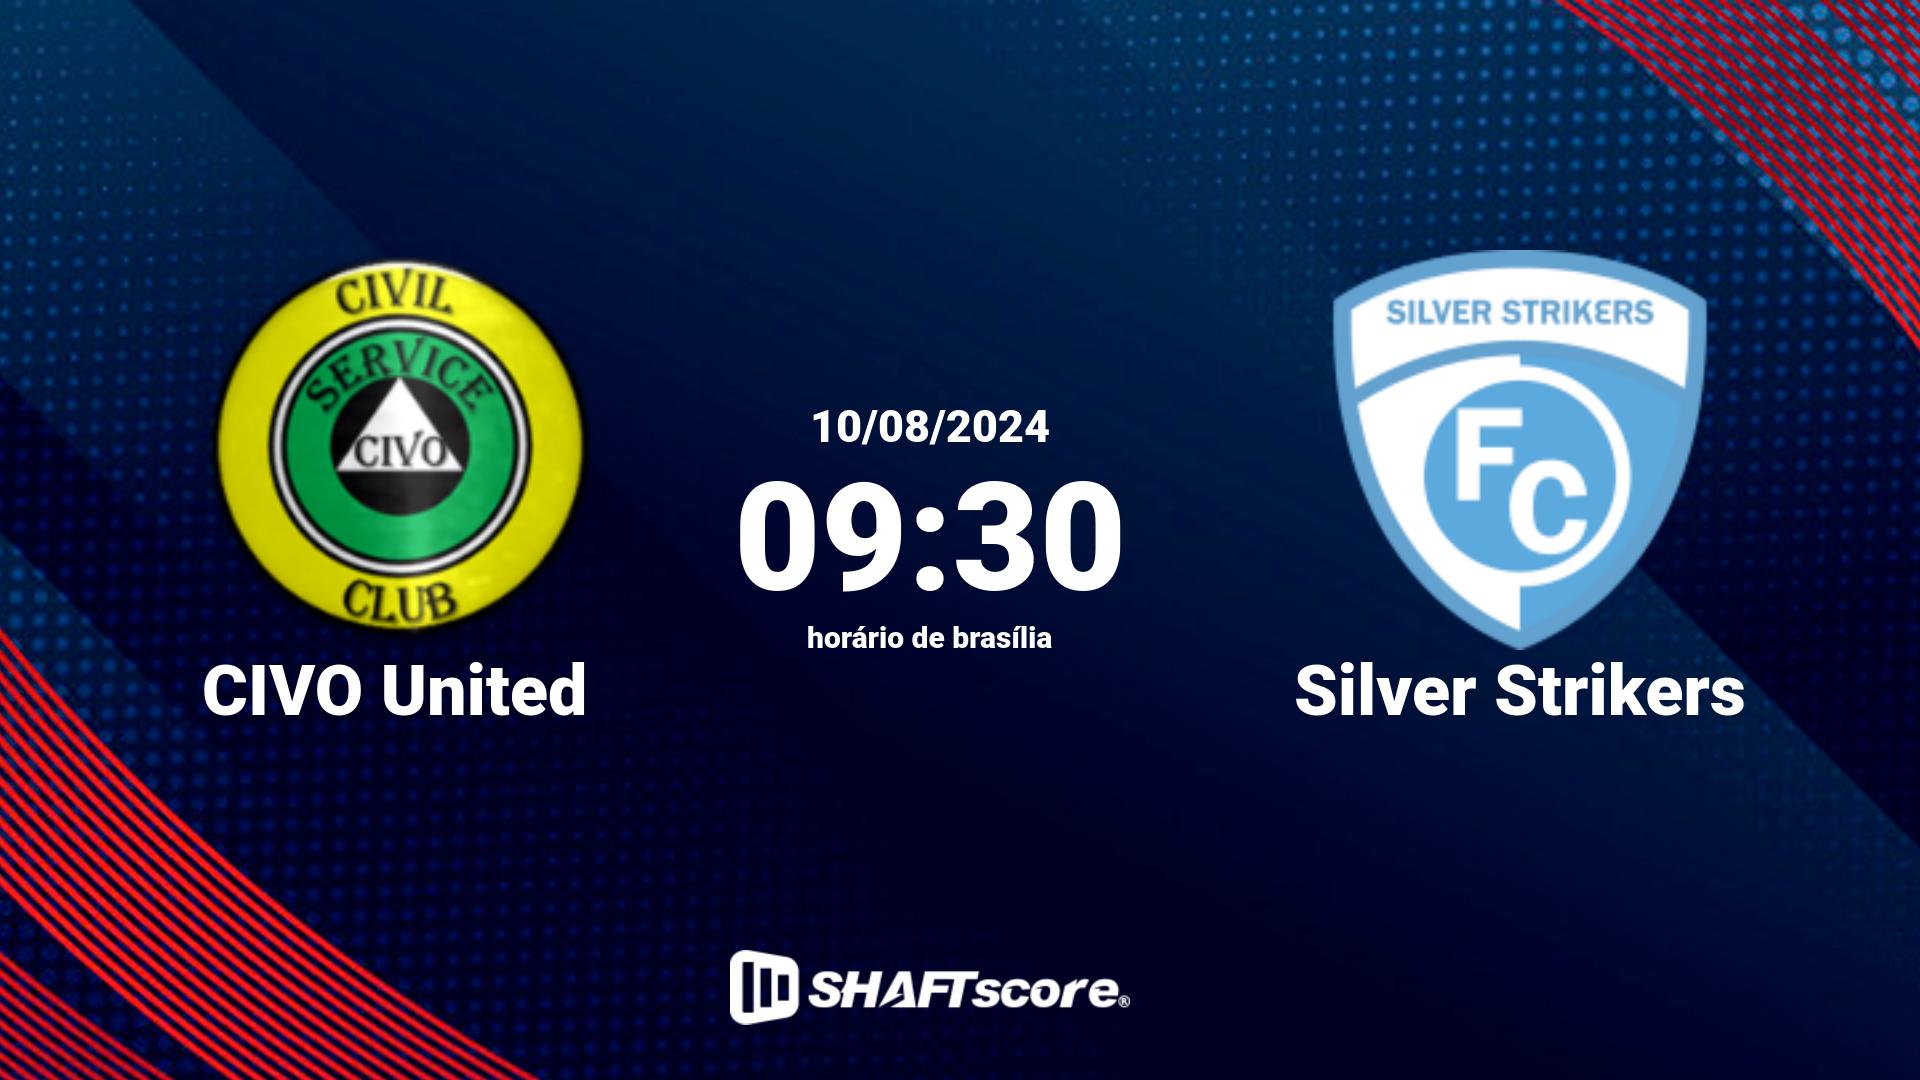 Estatísticas do jogo CIVO United vs Silver Strikers 10.08 09:30